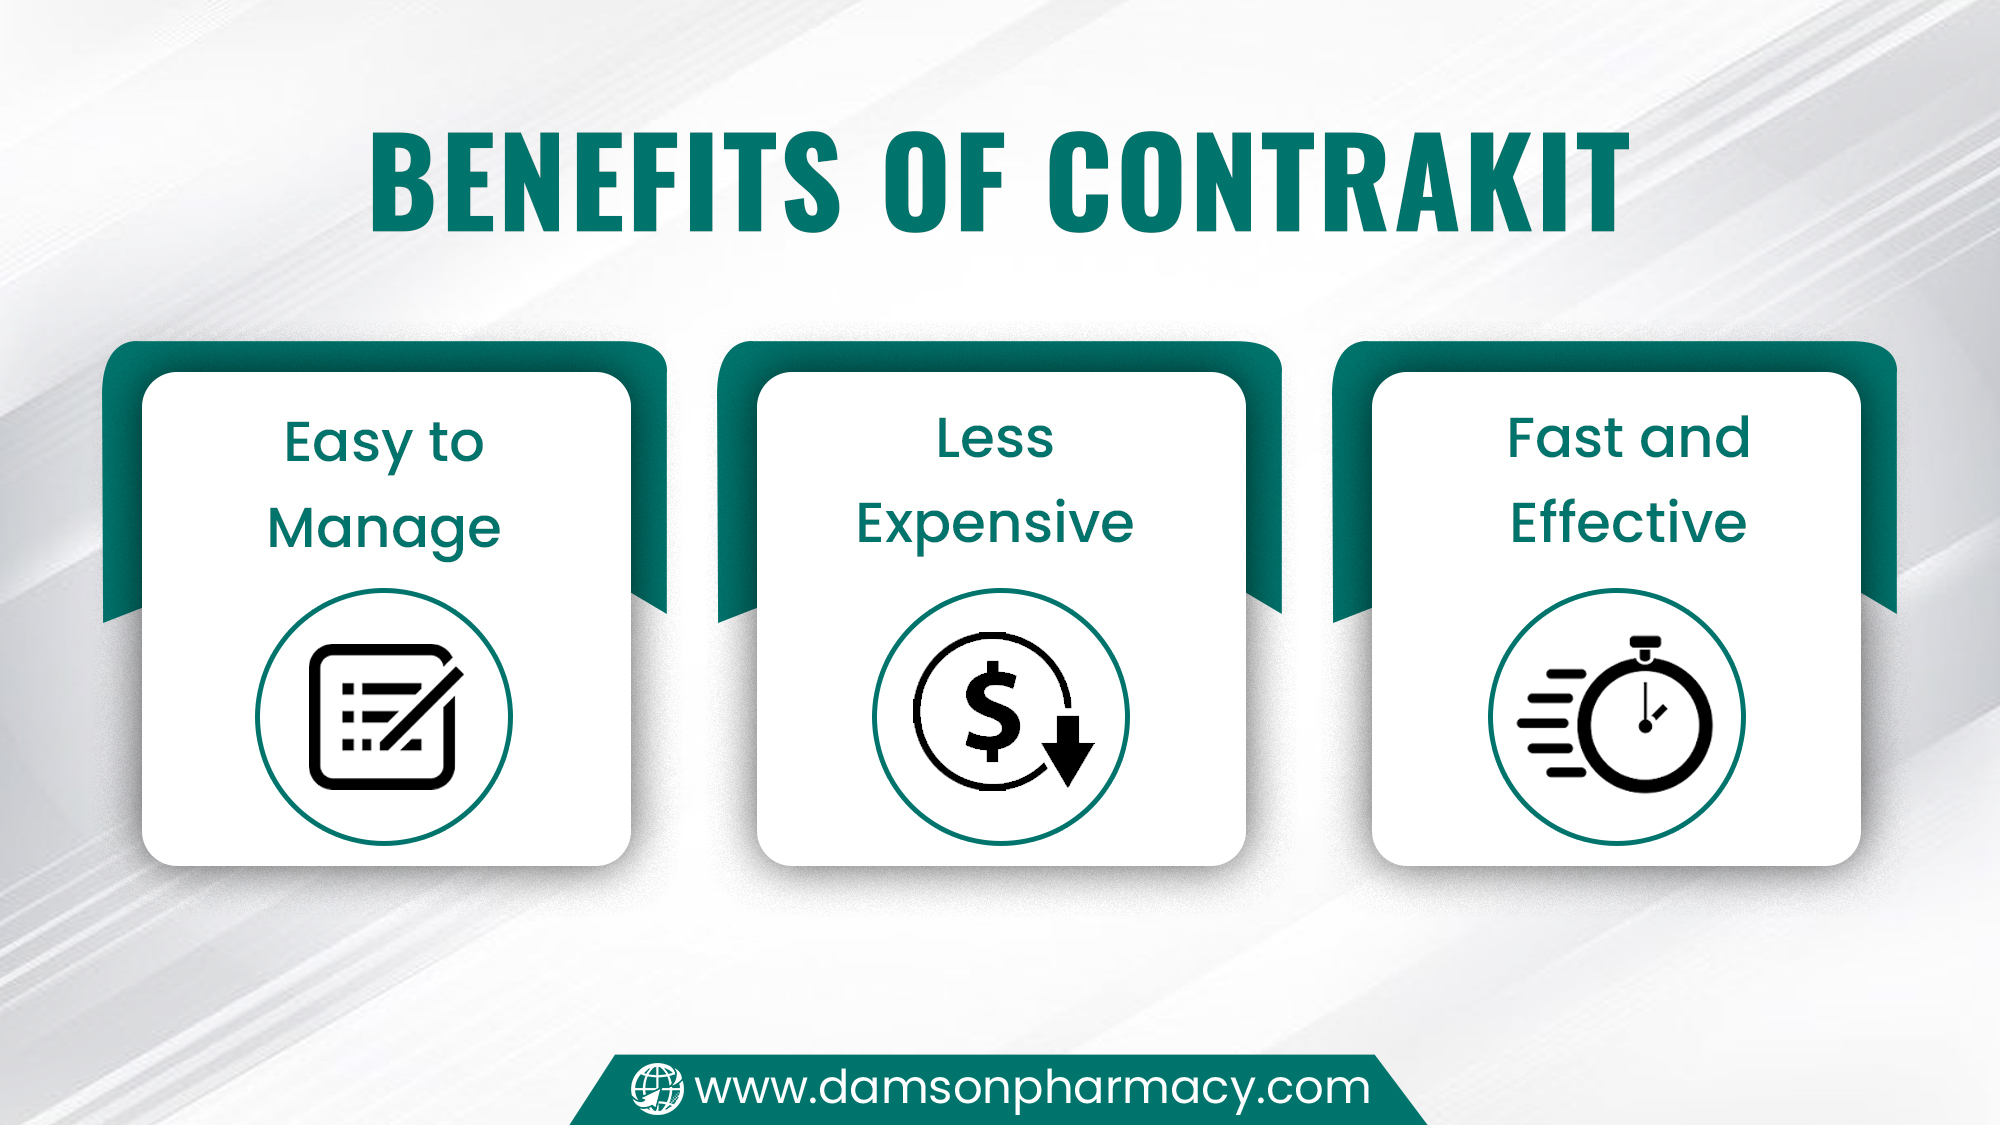 Benefits of Contrakit